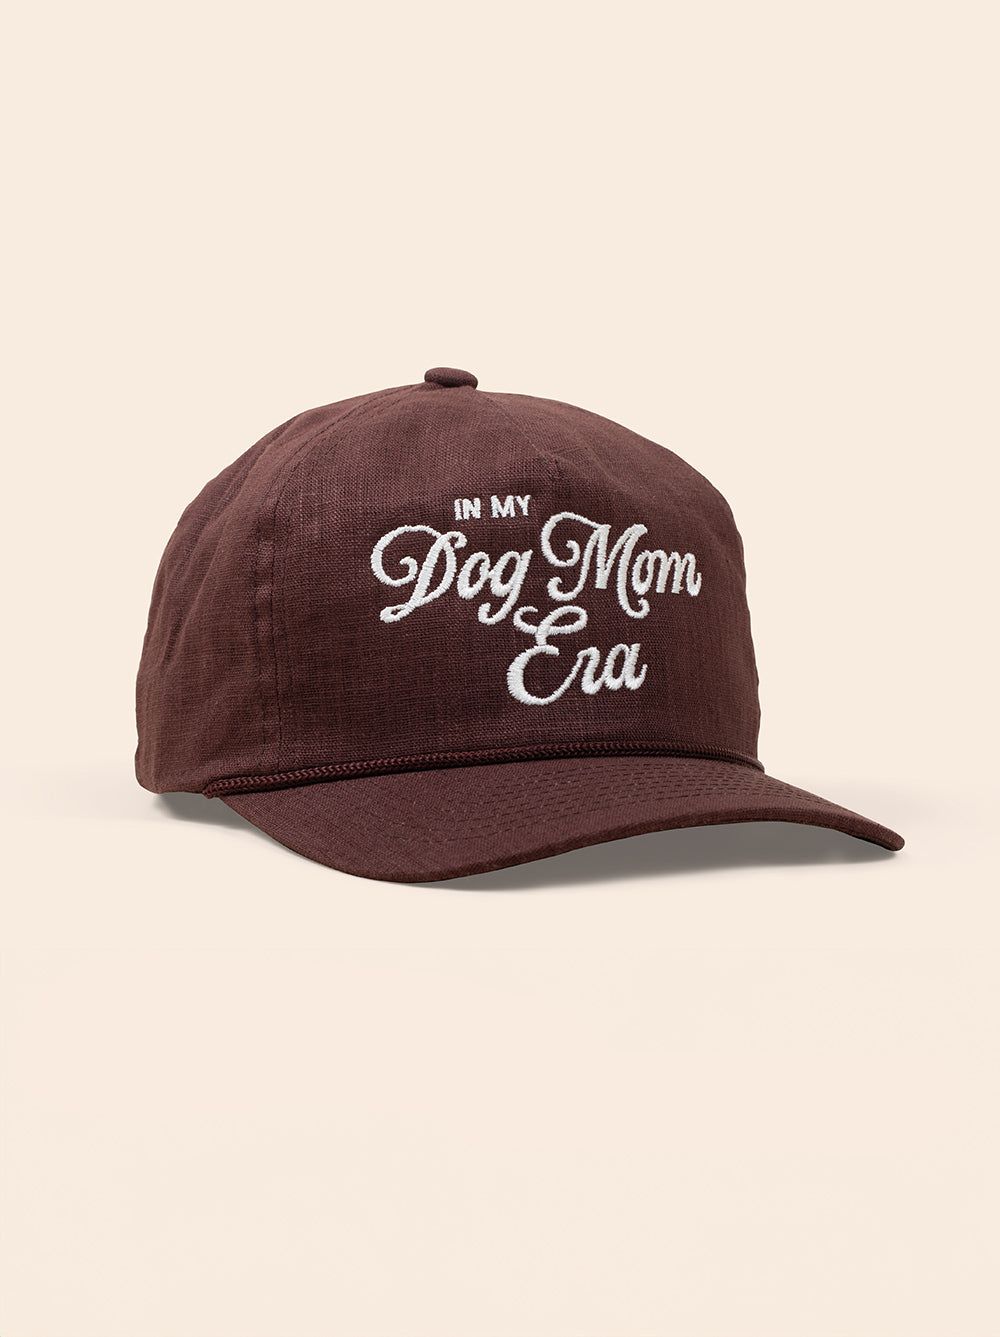 Dog Mom Era Hat